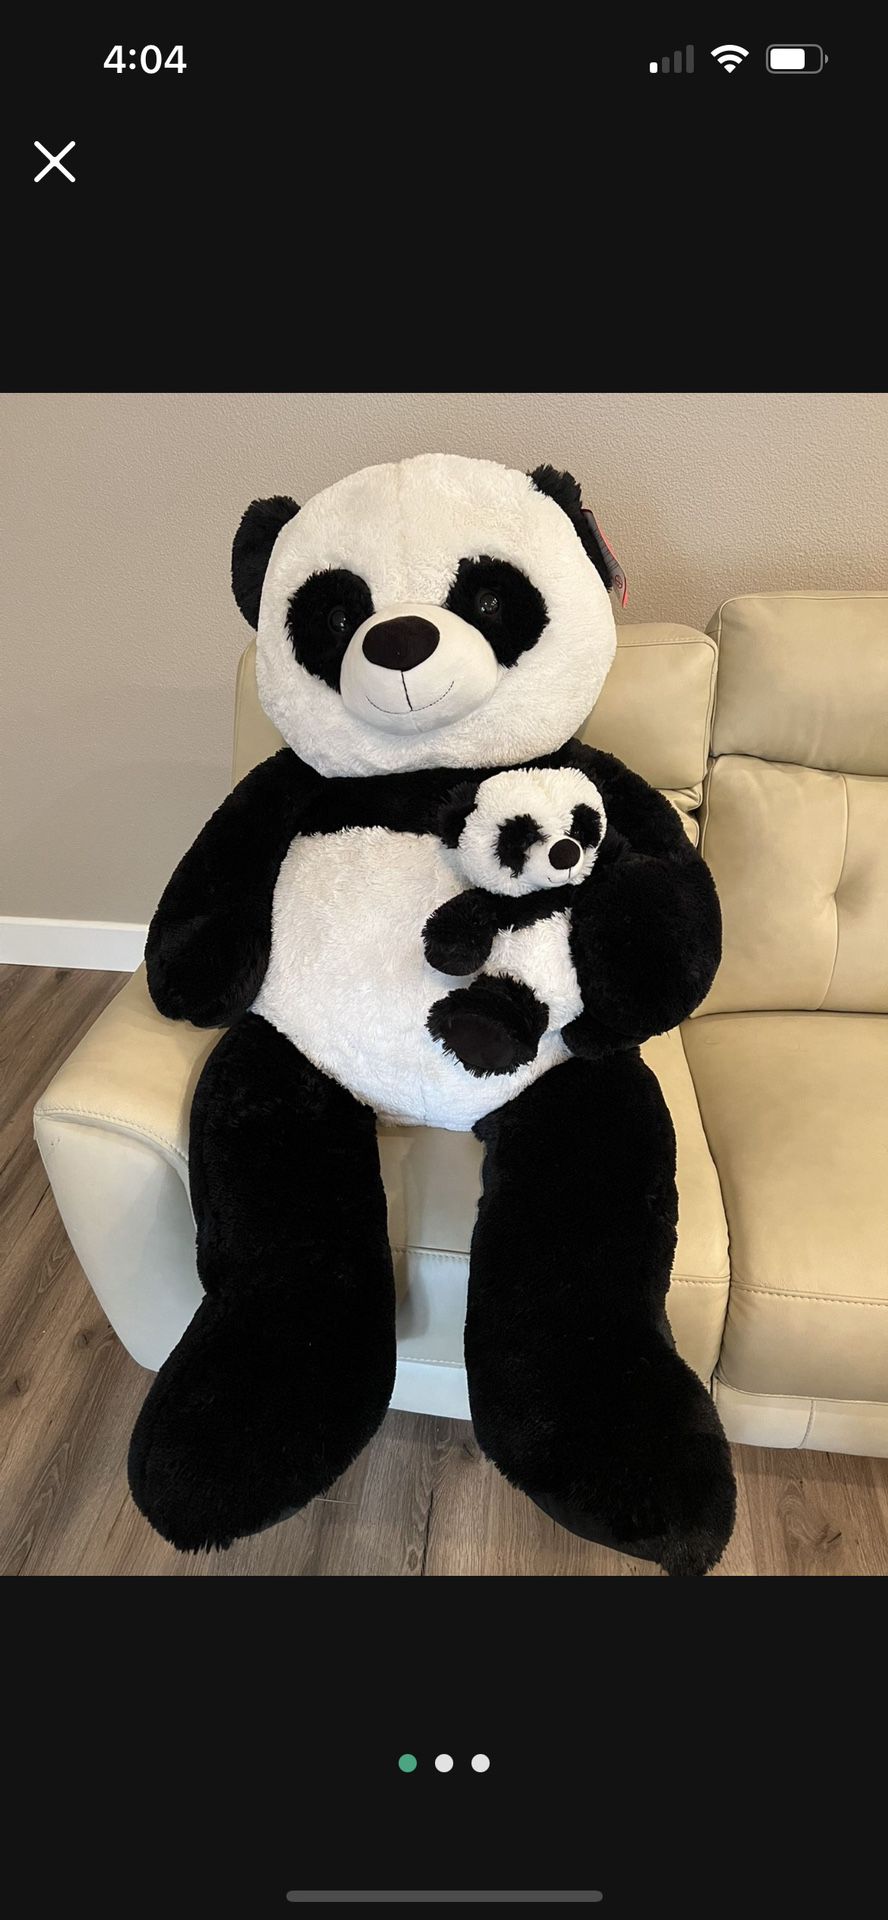 52” Giant Panda Bear With Baby Bear